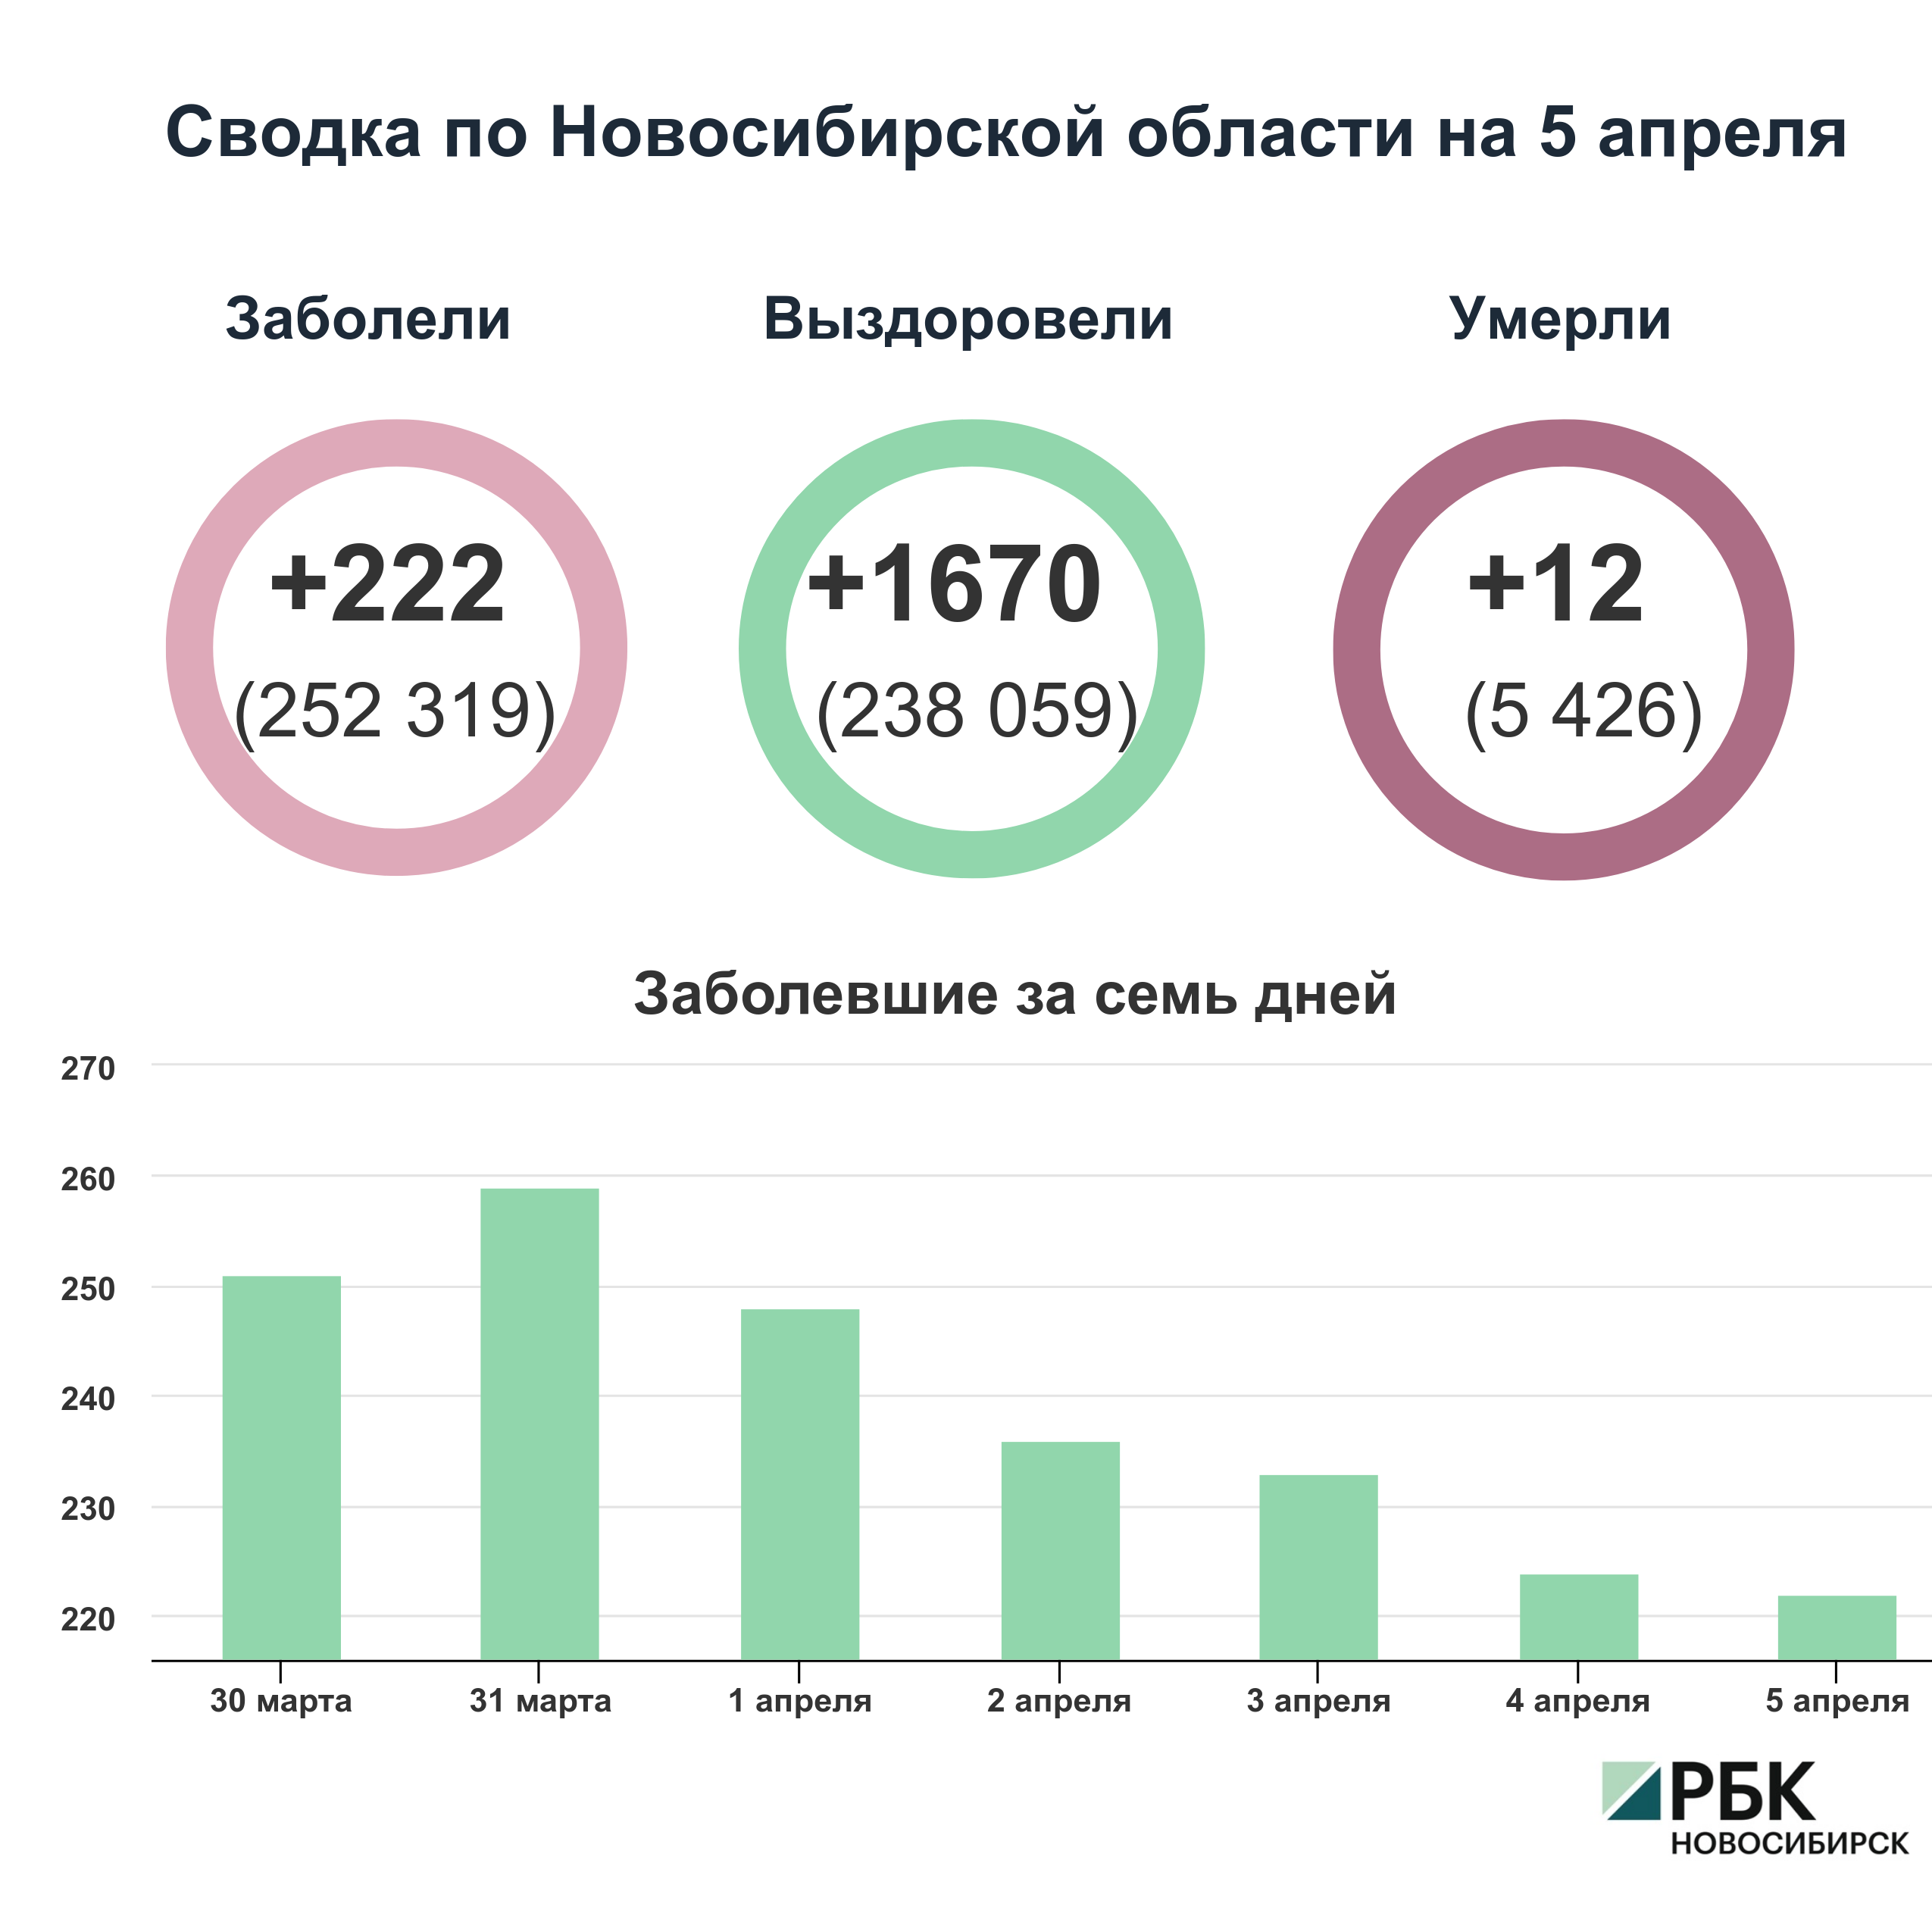 Коронавирус в Новосибирске: сводка на 5 апреля